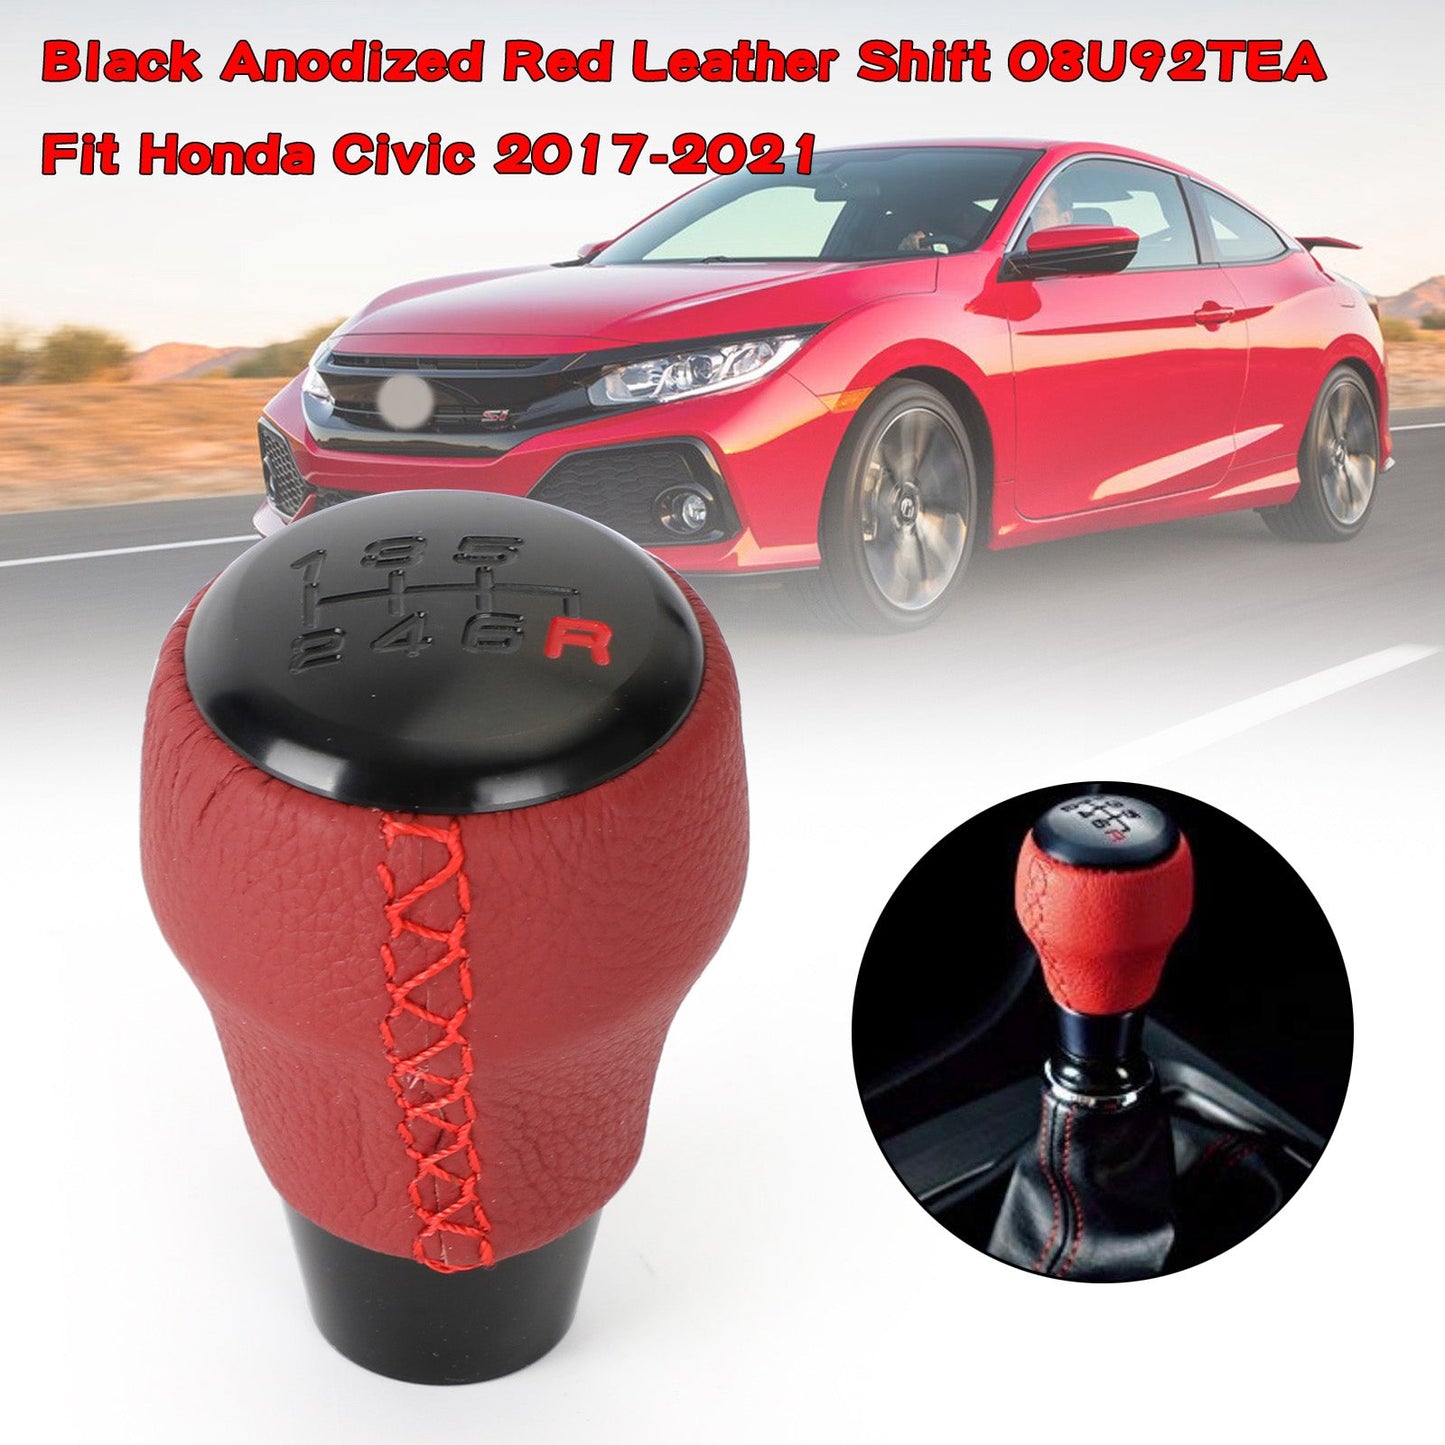 Black Anodized Red Leather Shift 08U92TEA Fit Honda Civic 17-21 Type R 6 Spd